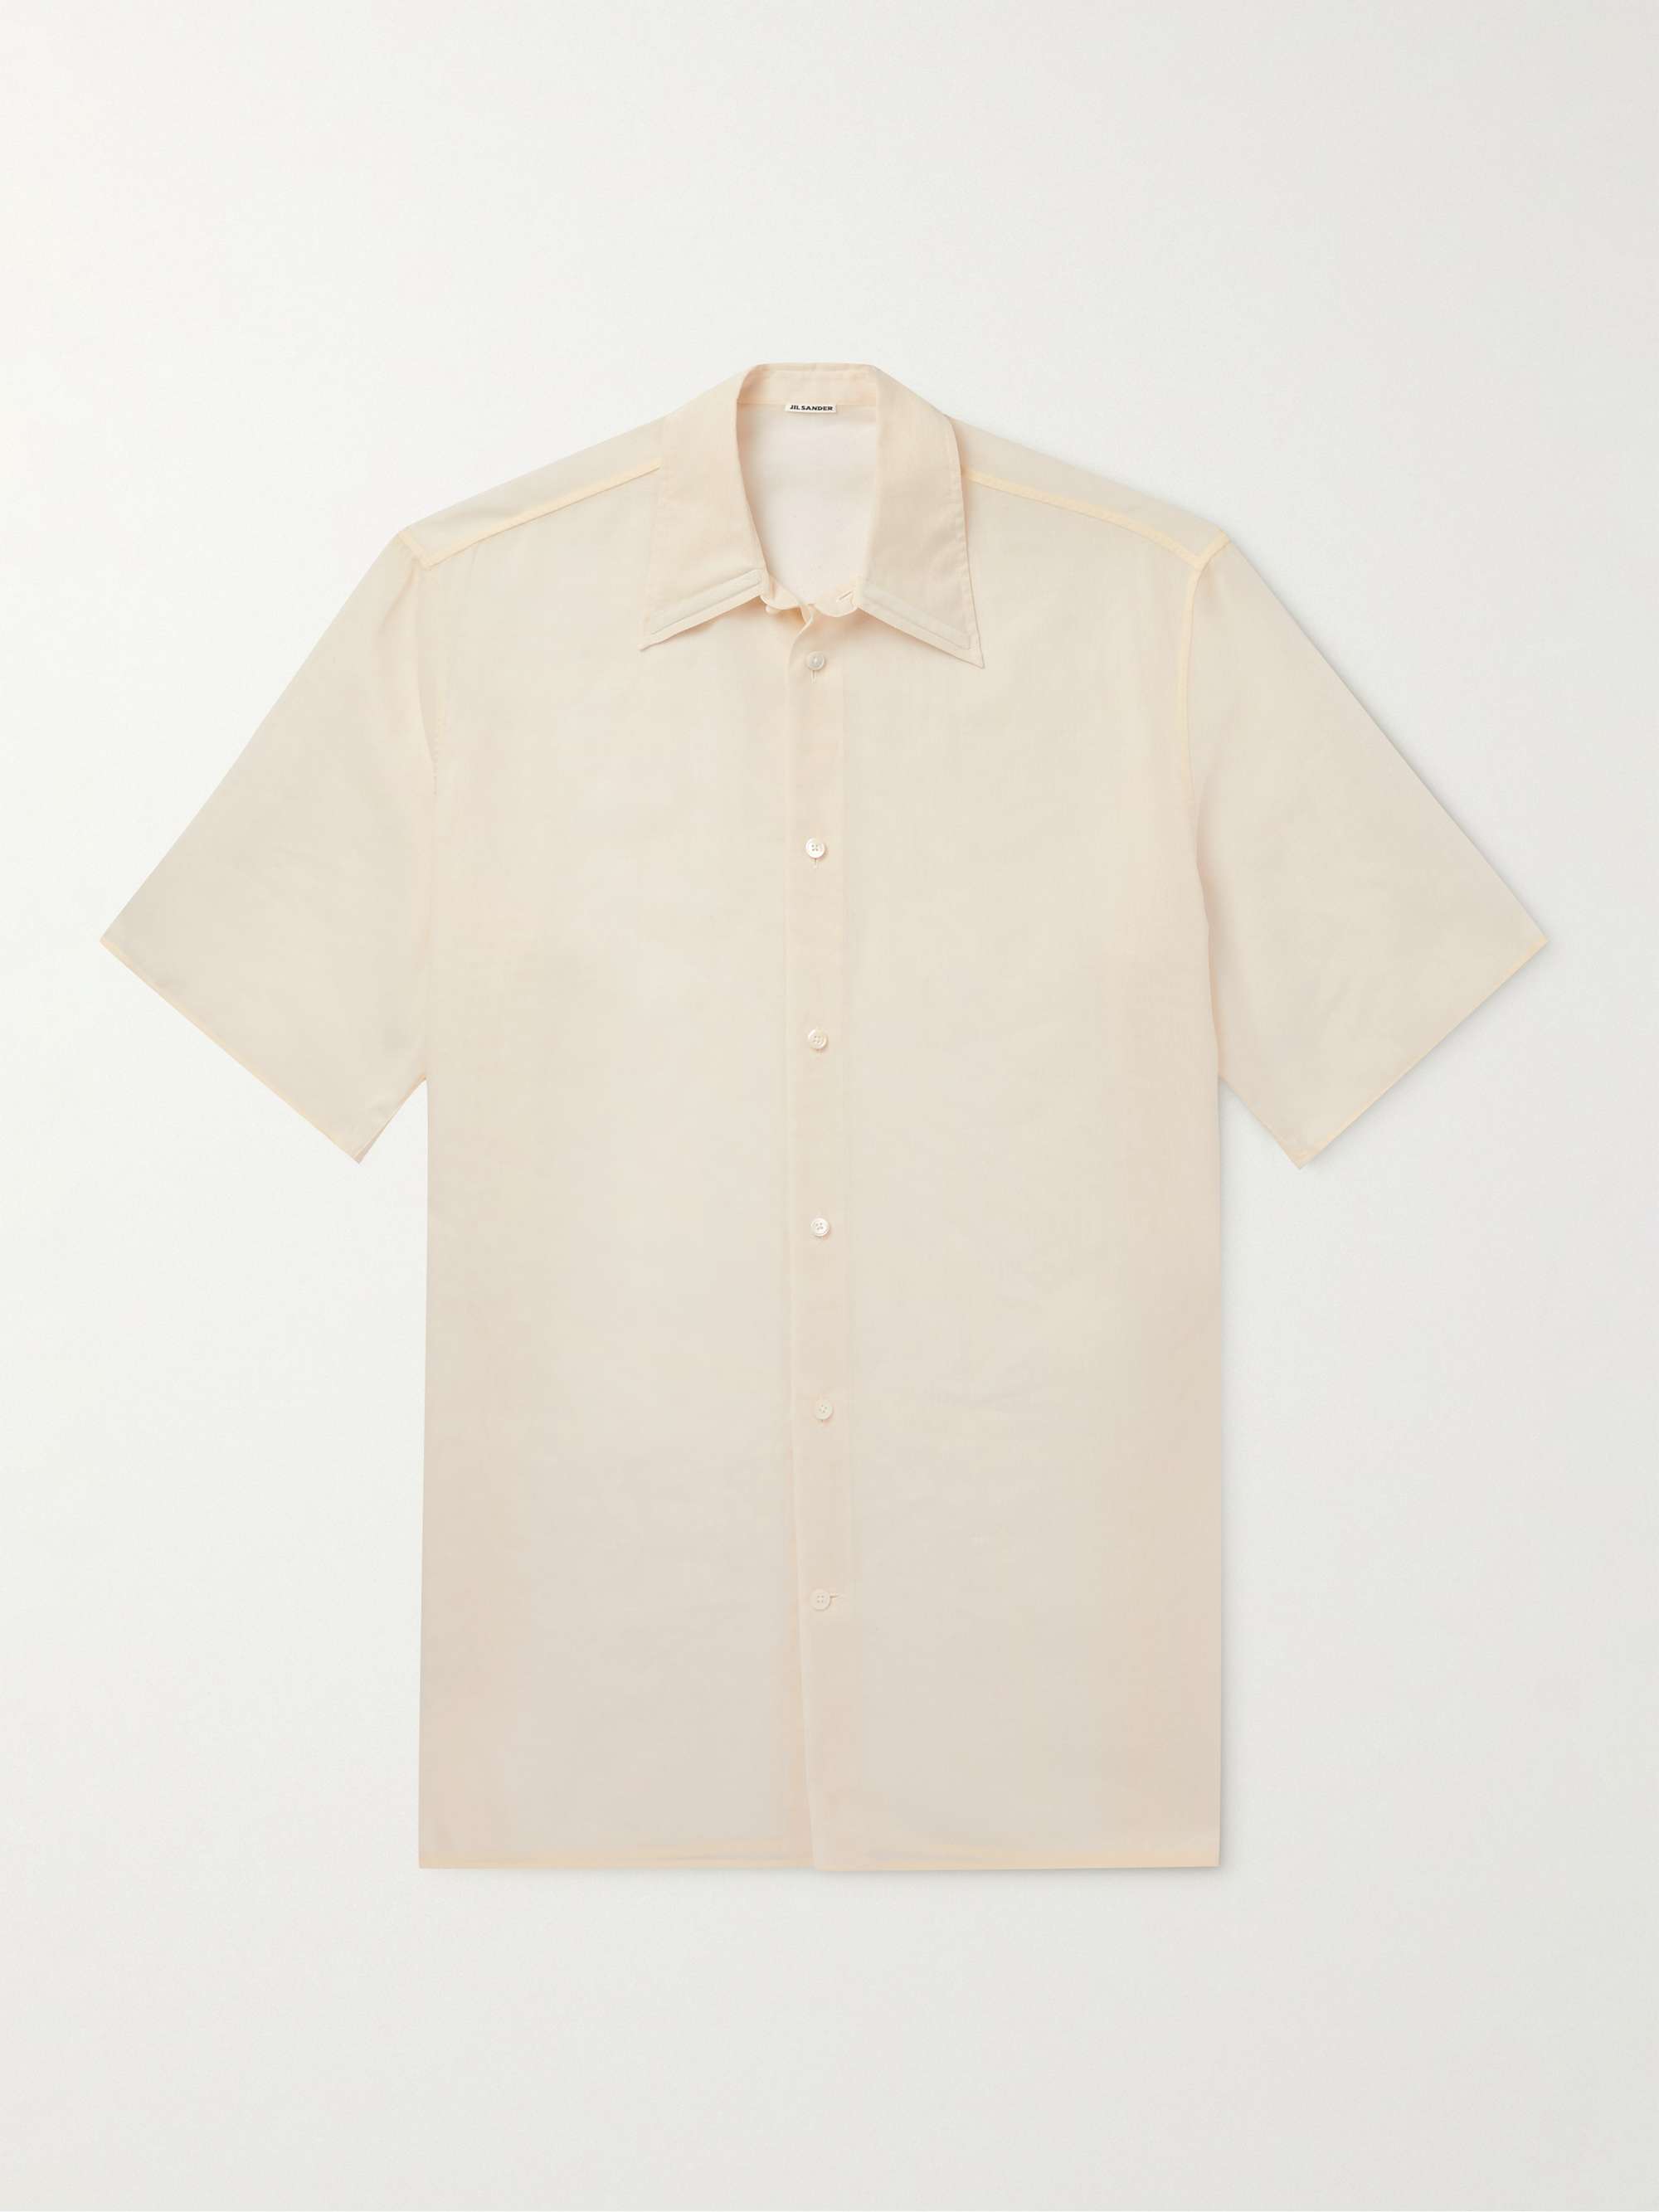 JIL SANDER Cotton-Gauze Shirt